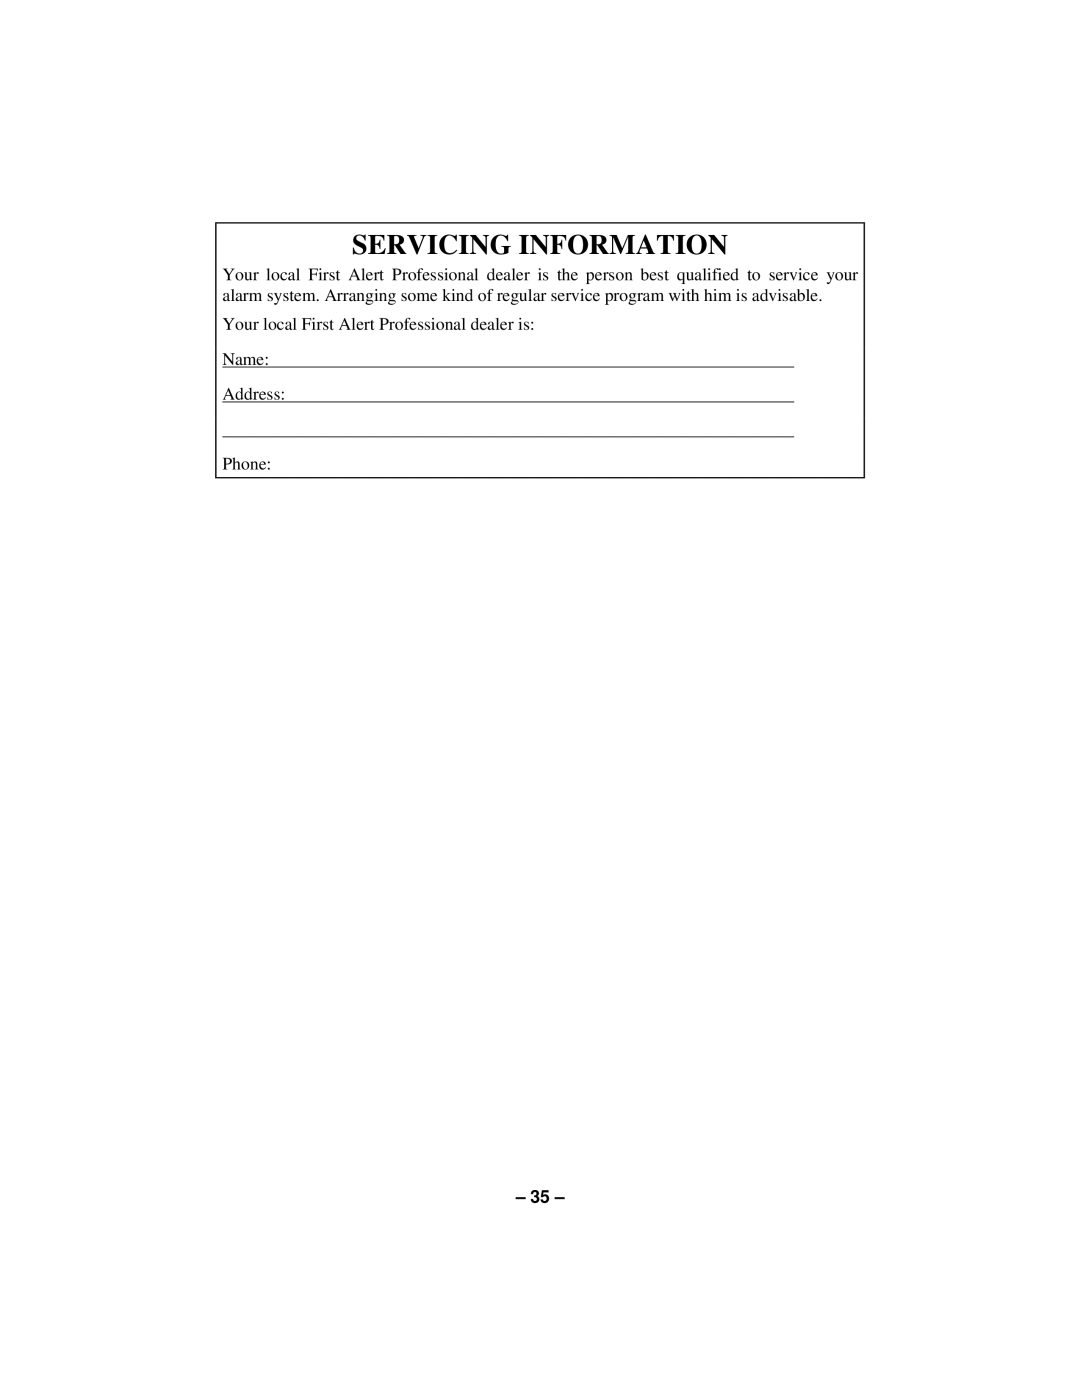 First Alert N8891-1 manual Servicing Information 